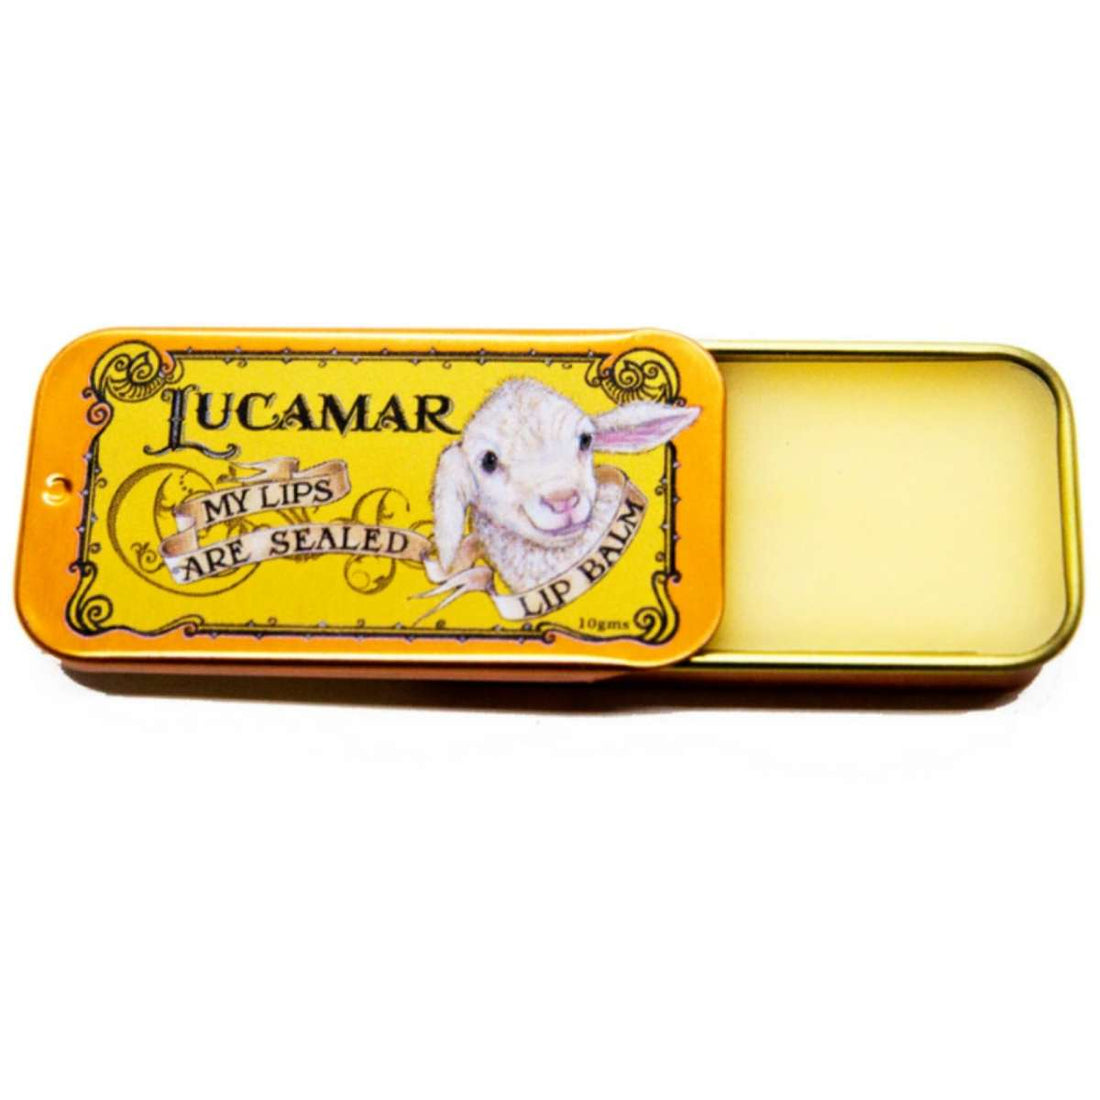 Lucamar Choc Mint My Lips Are Sealed Organic Lip Balm 10g